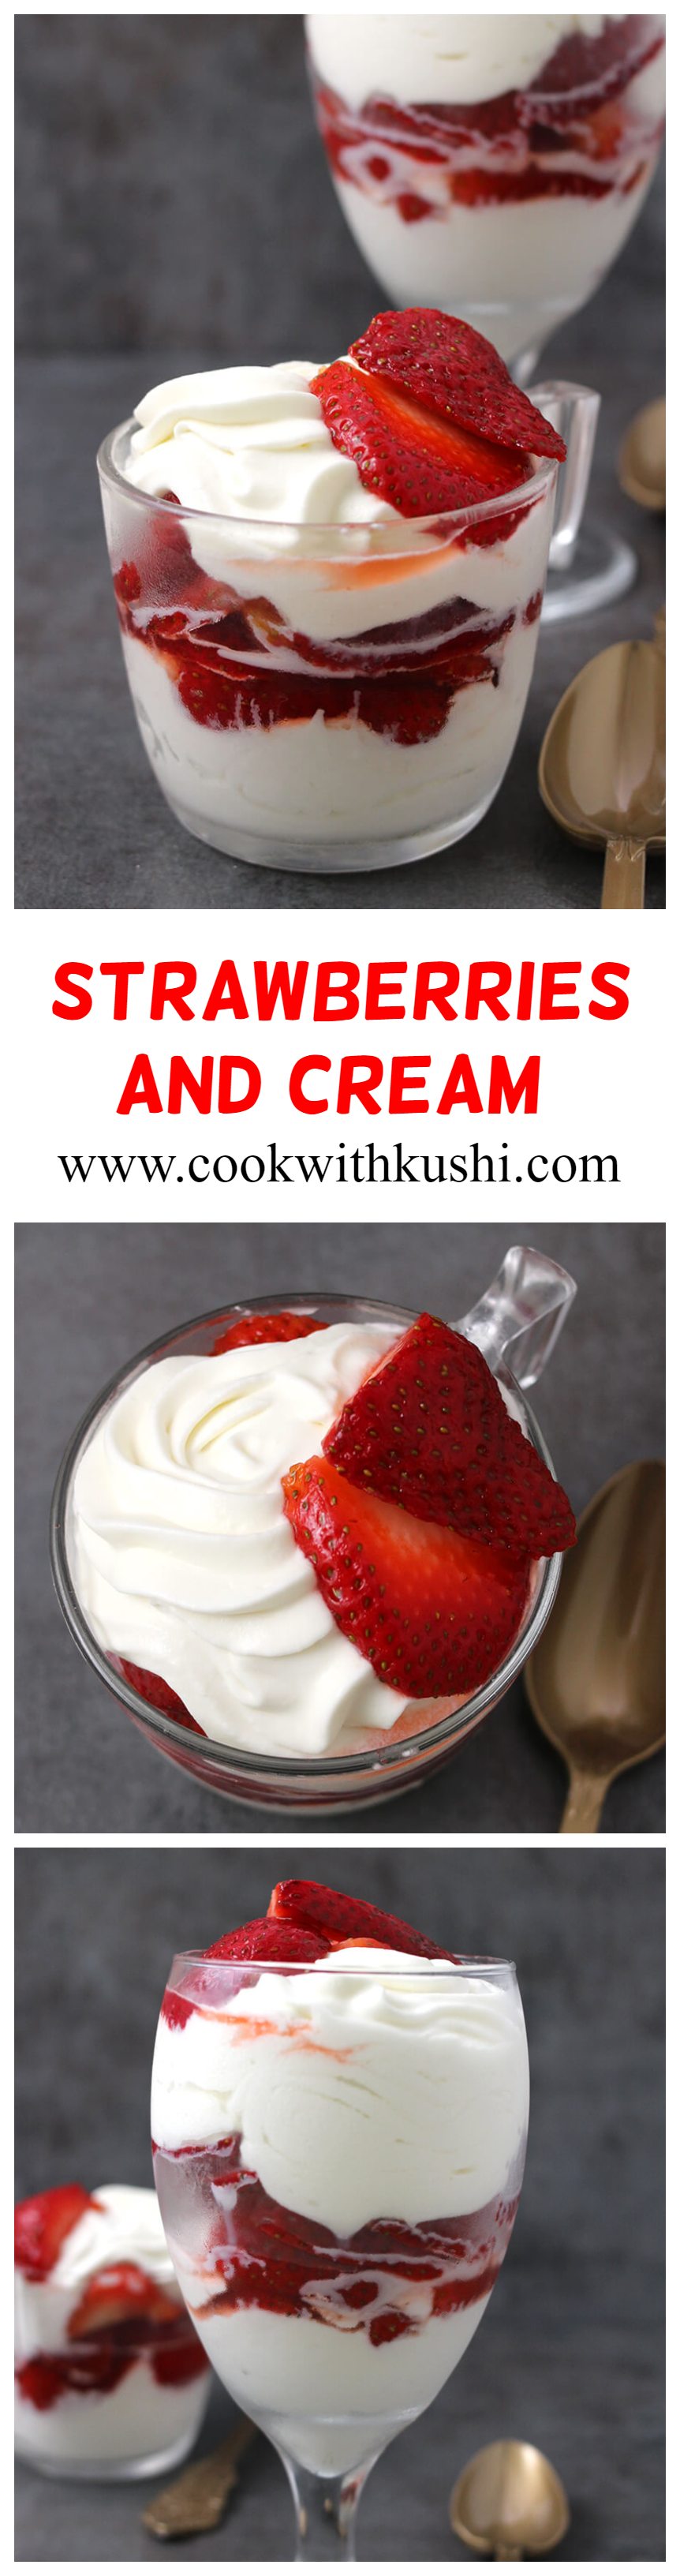 Strawberries and Cream / fresas con crema receta / Wimbledon / Strawberry Romanoff / Strawberry Parfaits / Best ways to use fresh strawberries / Strawberries with whipped cream